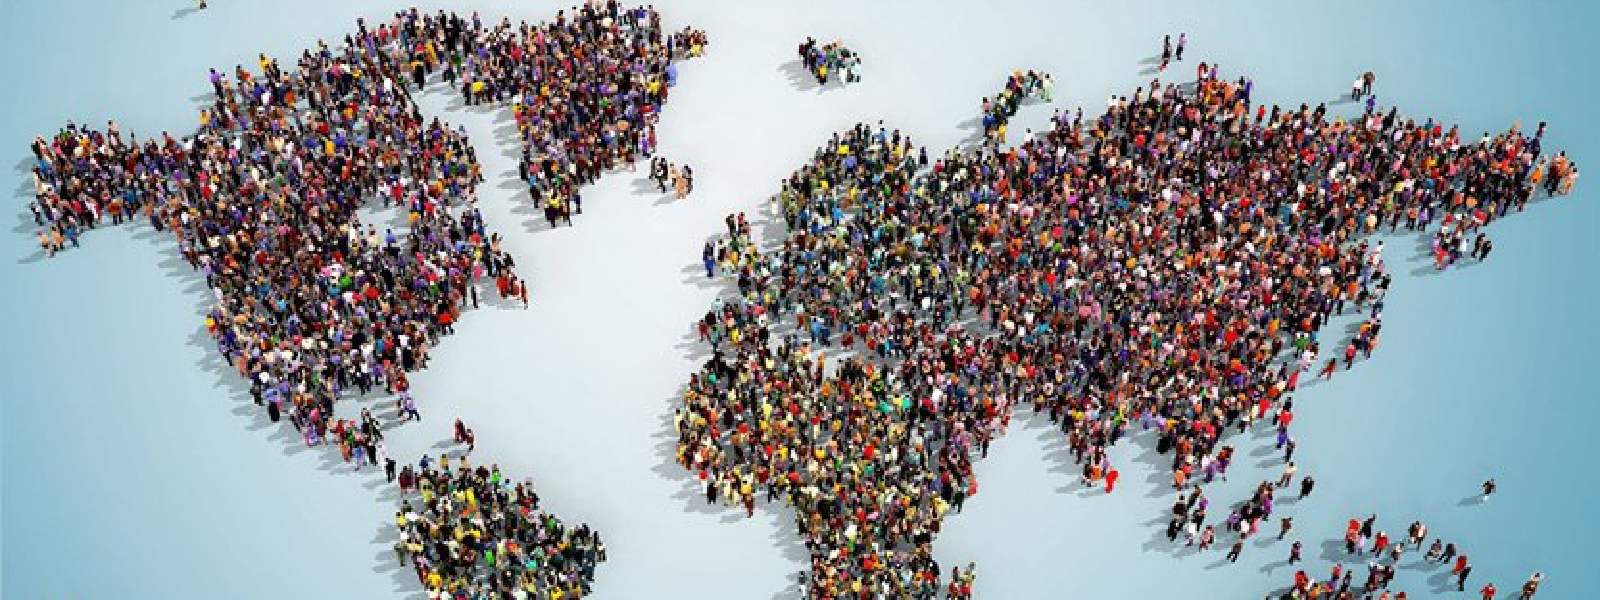 World Population hits 8 BILLION & counting